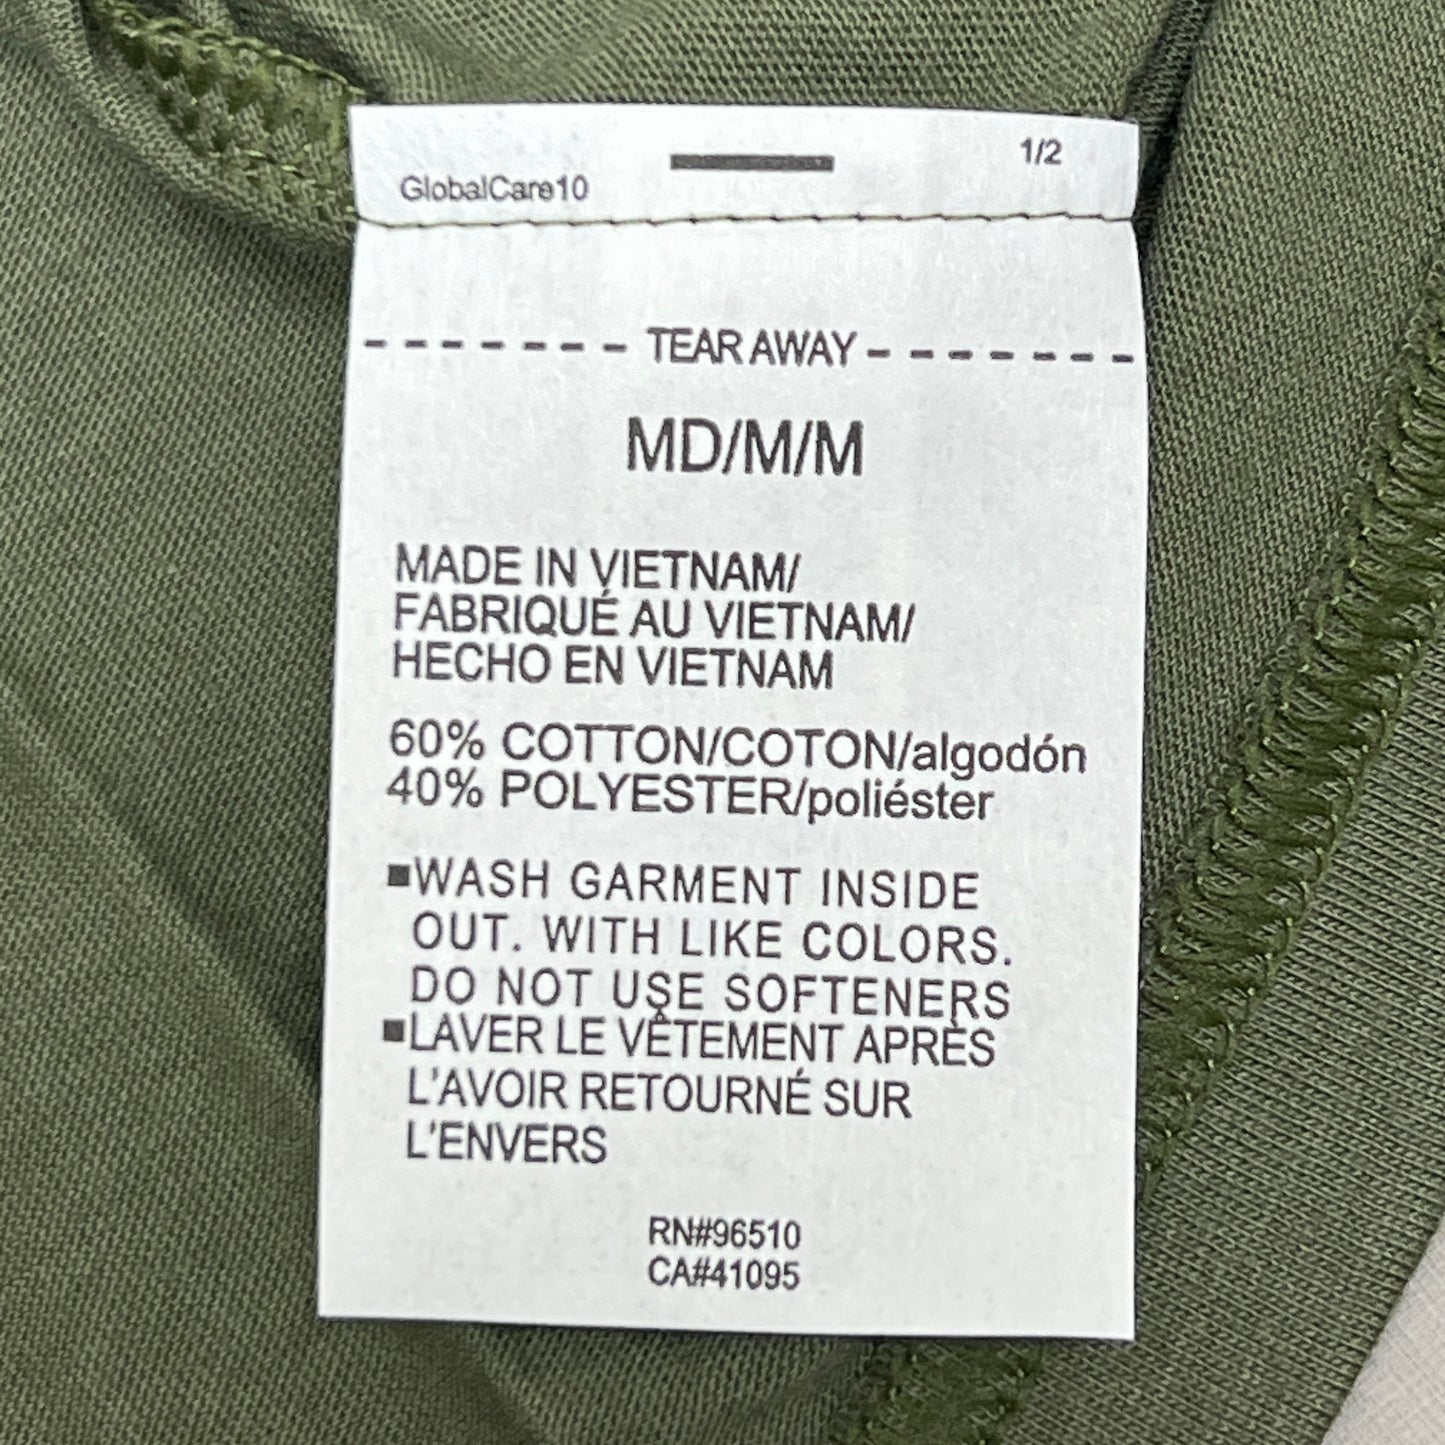 UNDER ARMOUR Freedom Logo T-Shirt Men's Marine OD Green / Desert Sand - 390 Sz M 1370811 (New)